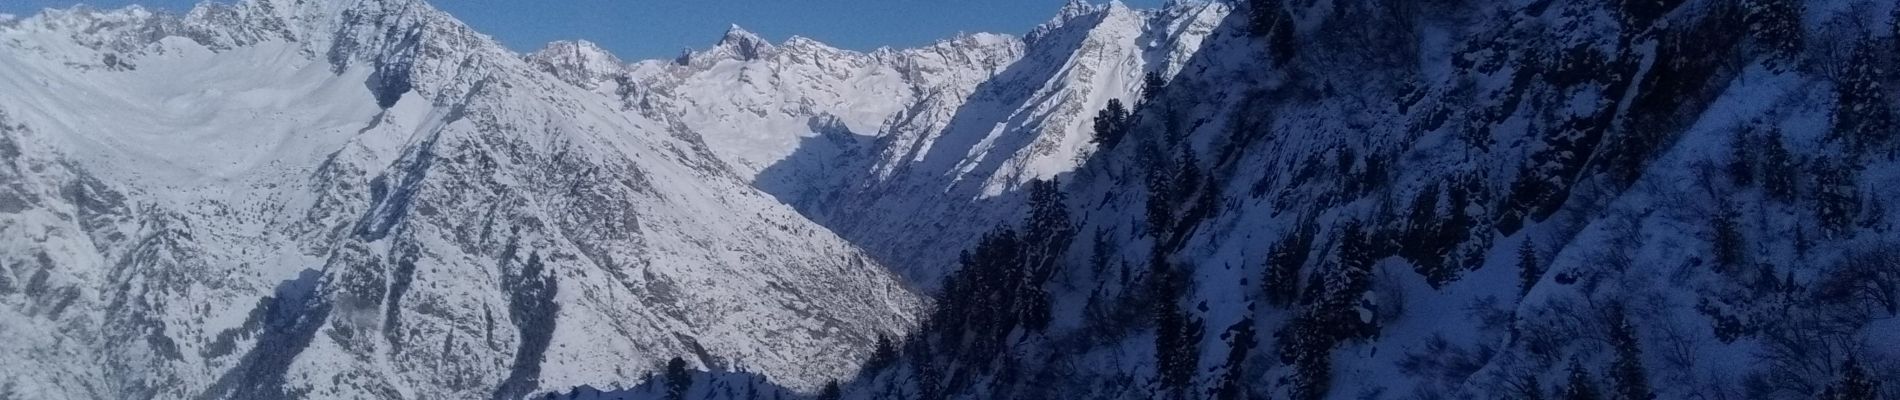 Percorso Sci alpinismo La Salette-Fallavaux - Pale ronde et col de près clos - Photo